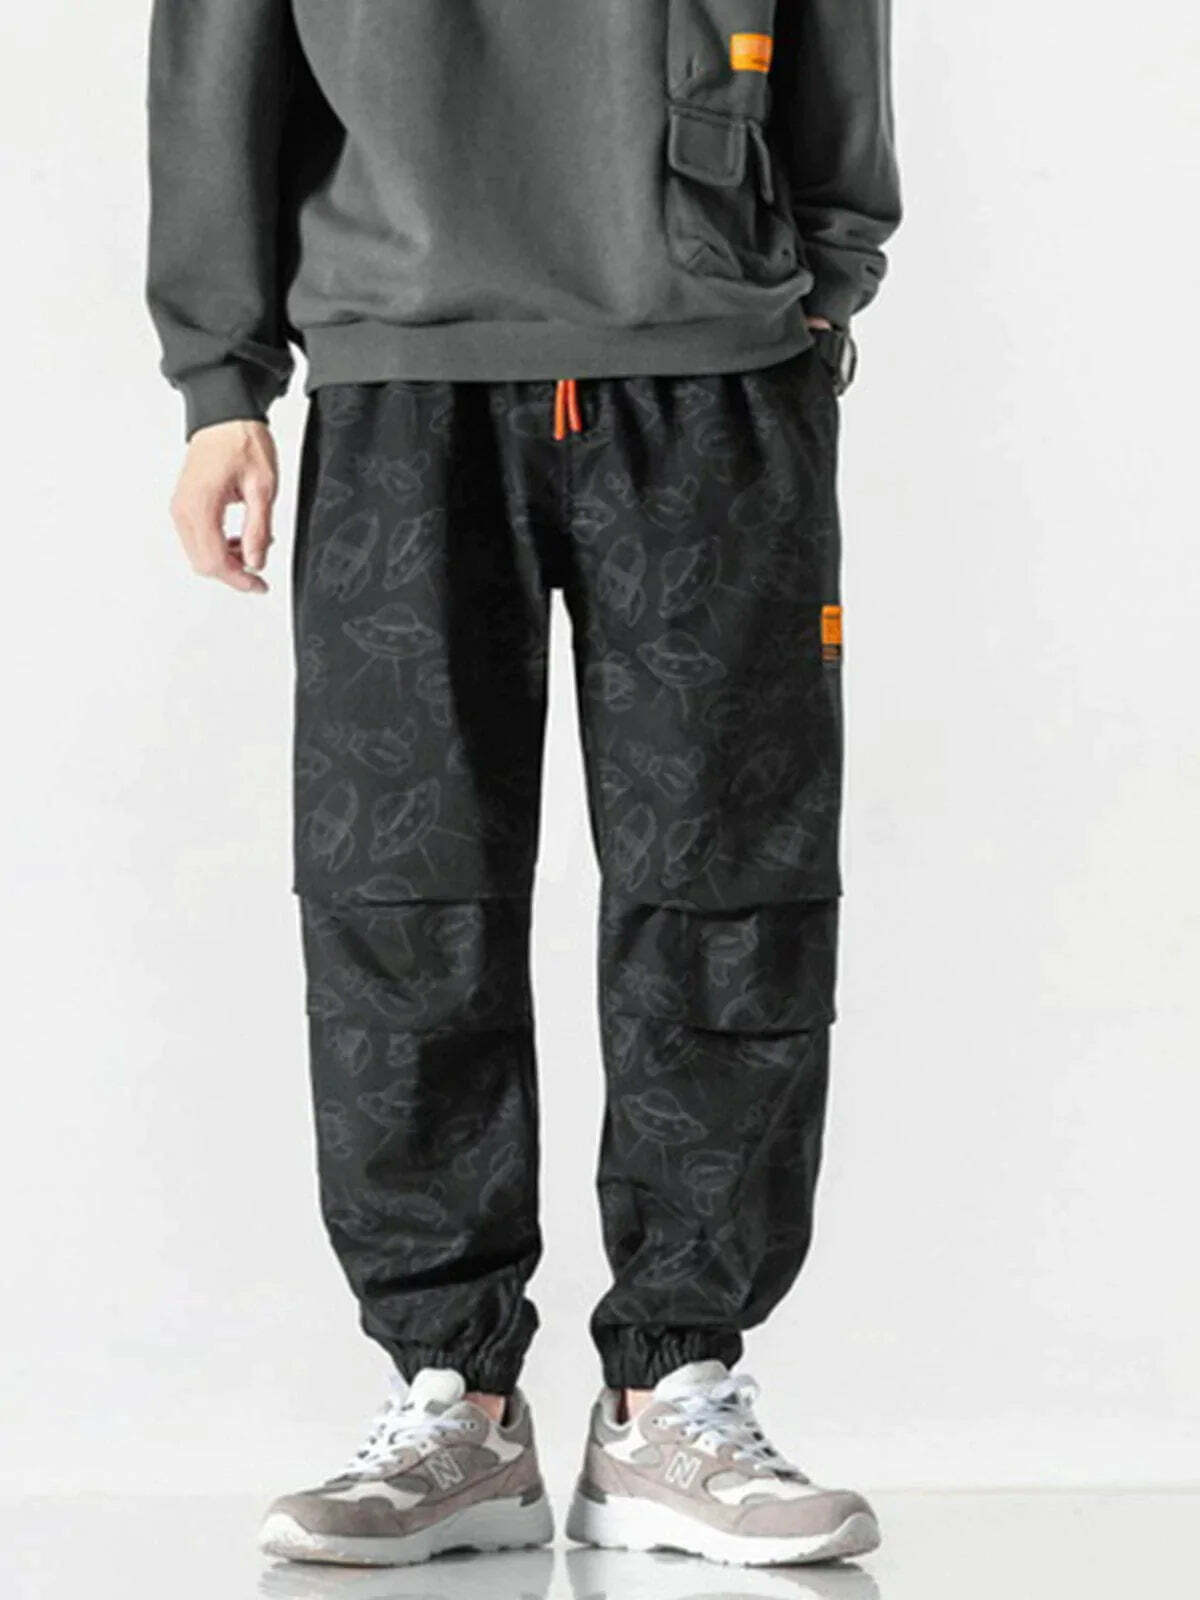 retro ufo pattern pants edgy & vibrant streetwear 7858